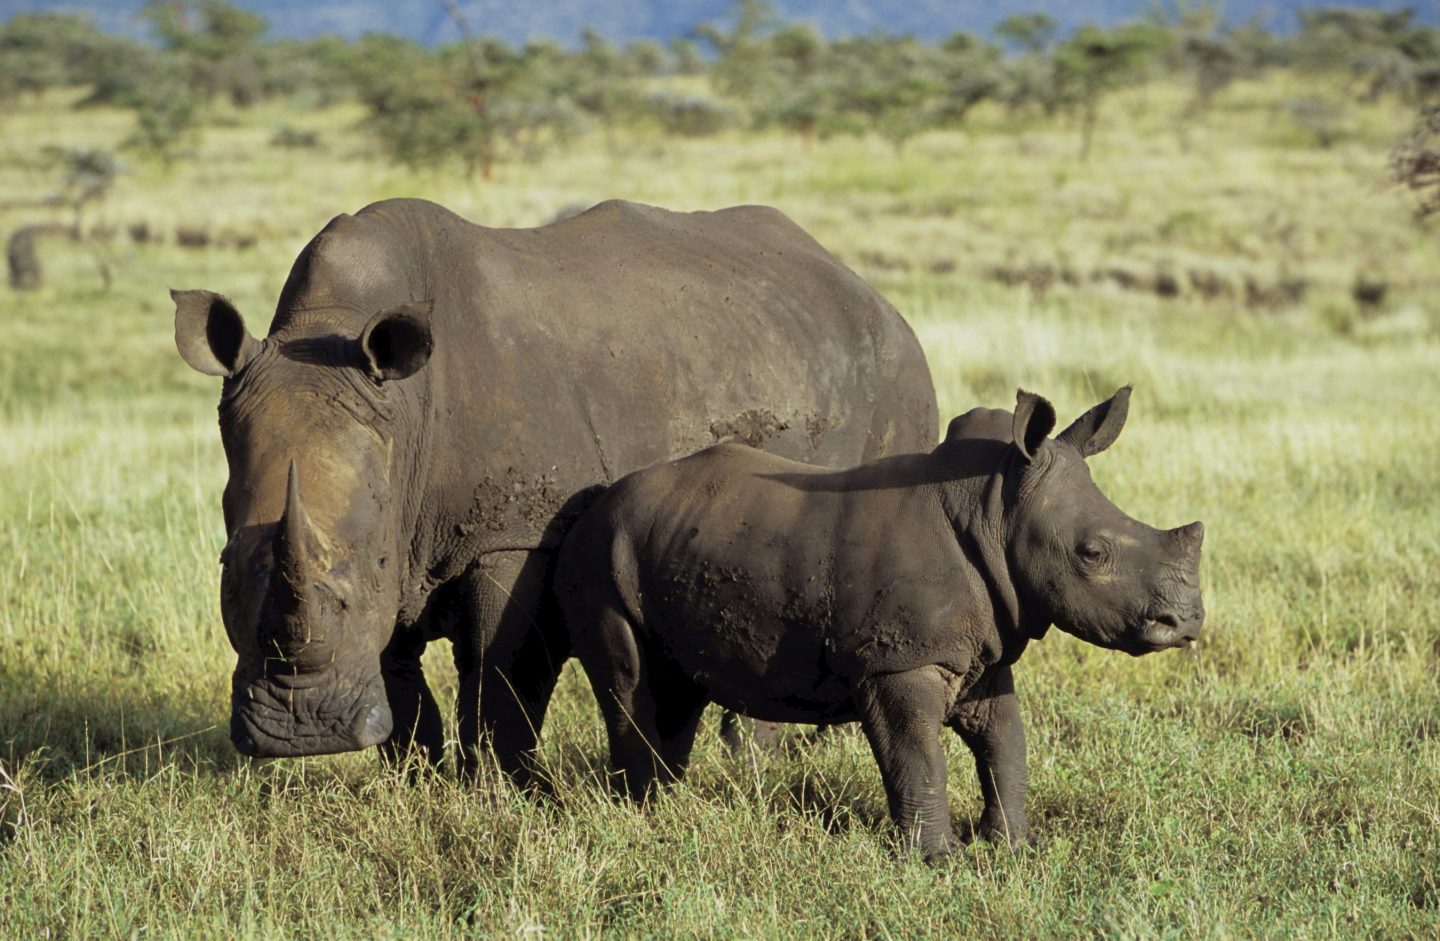 Rhino at Lewa Wildlife Conservancy, Kenya